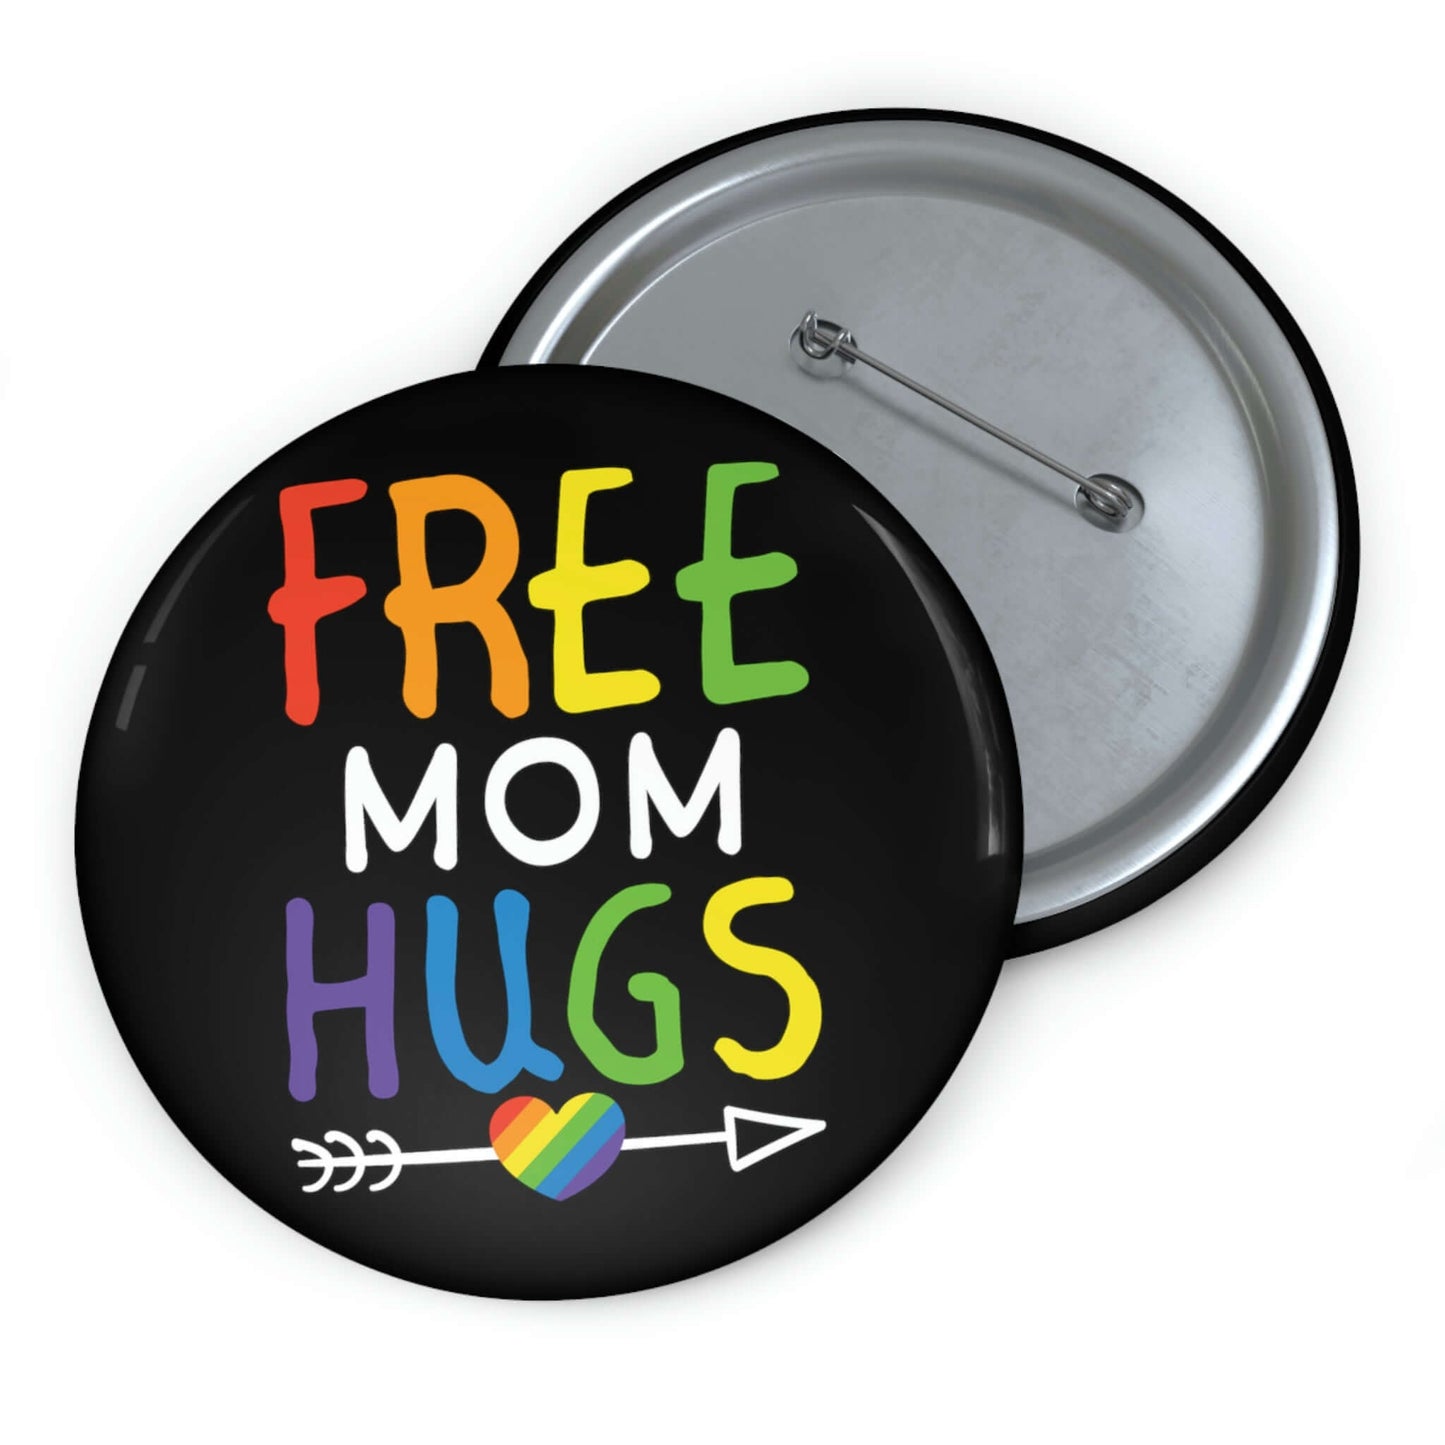 Free Mom hugs LGBTQ ally pinback button